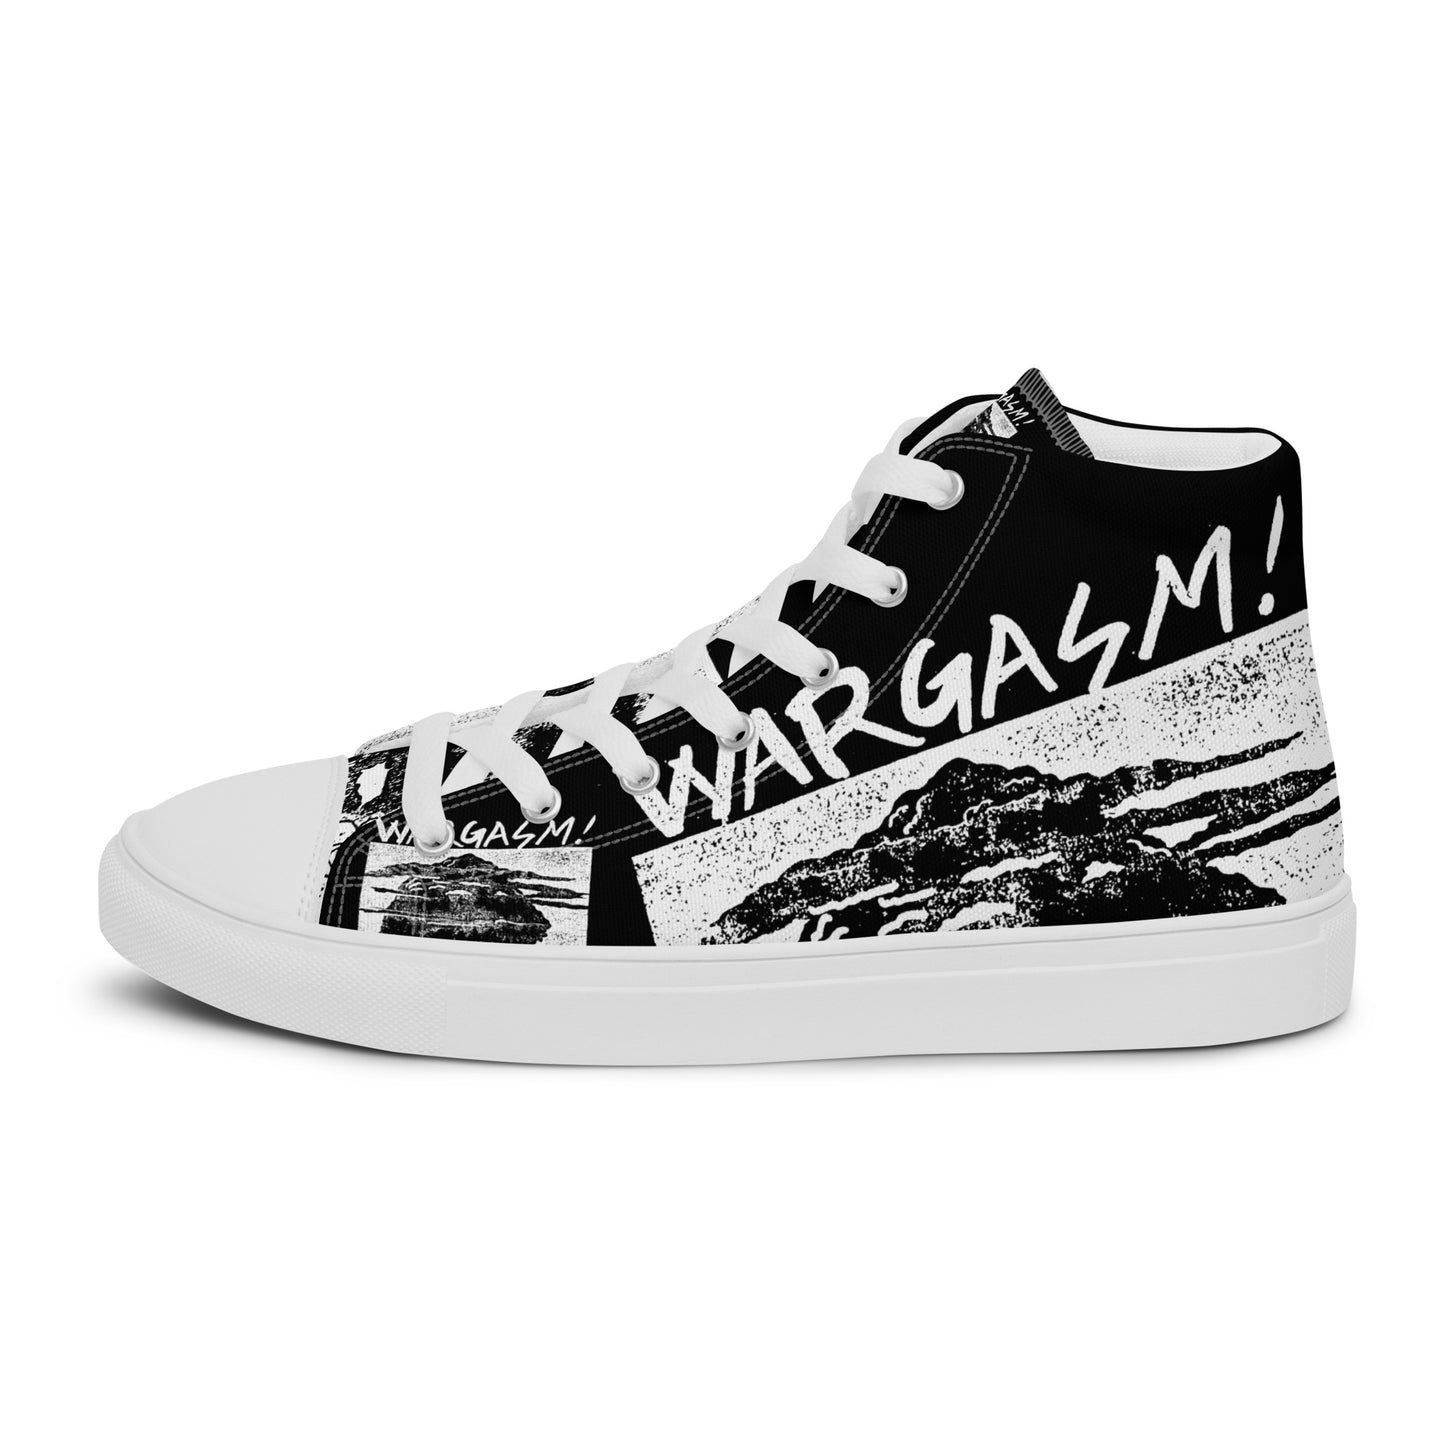 Winston Smith "Wargasm!" Men’s high top canvas shoes